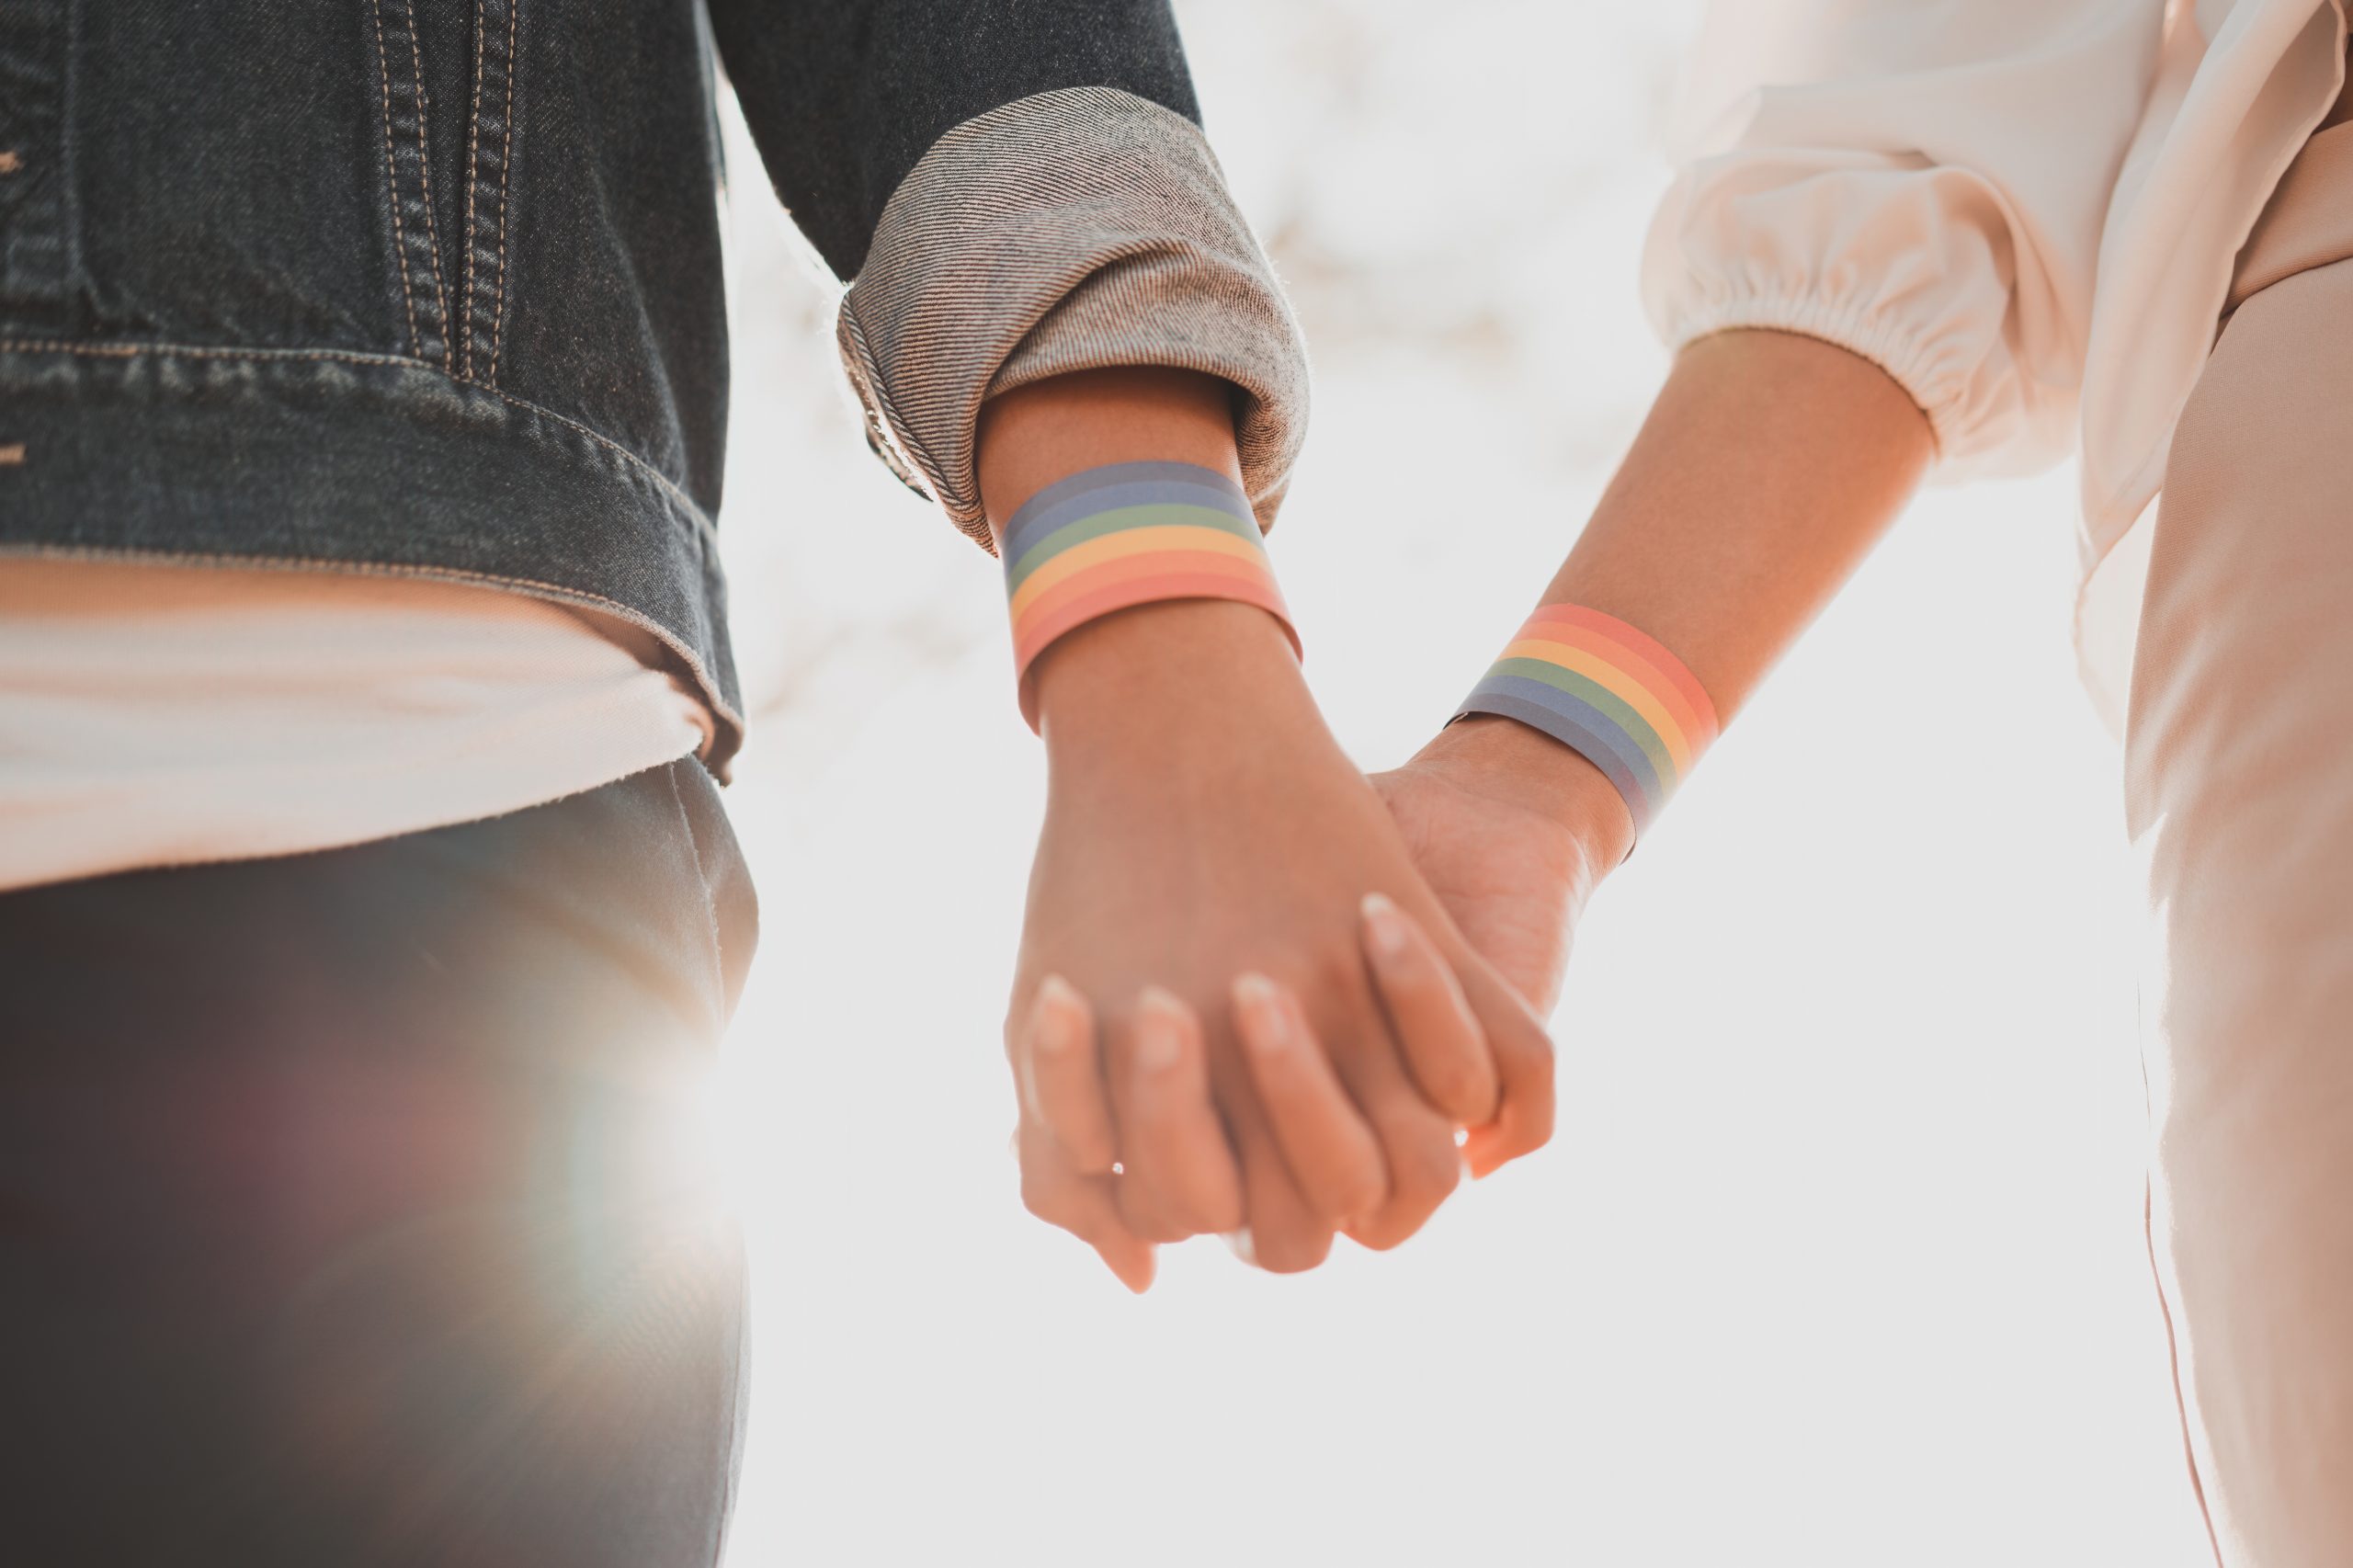 LGBTQ holding hands